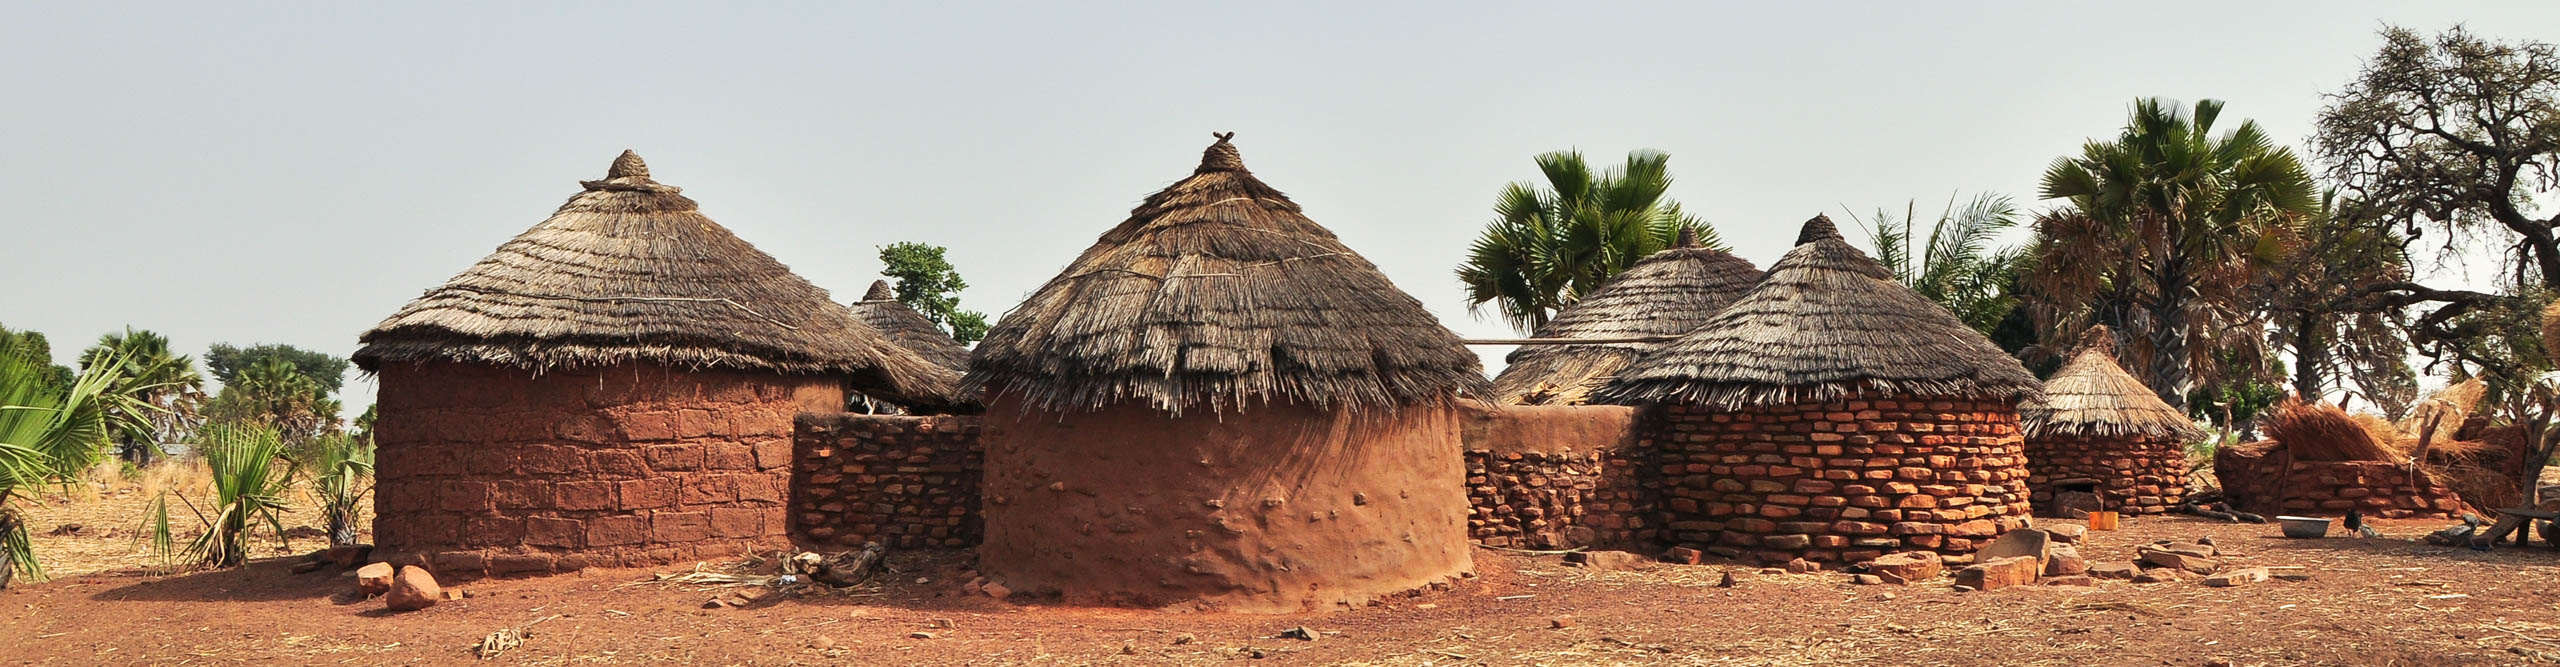 Round brick huts near Grottes de Nok in Togo in rural Western Africa